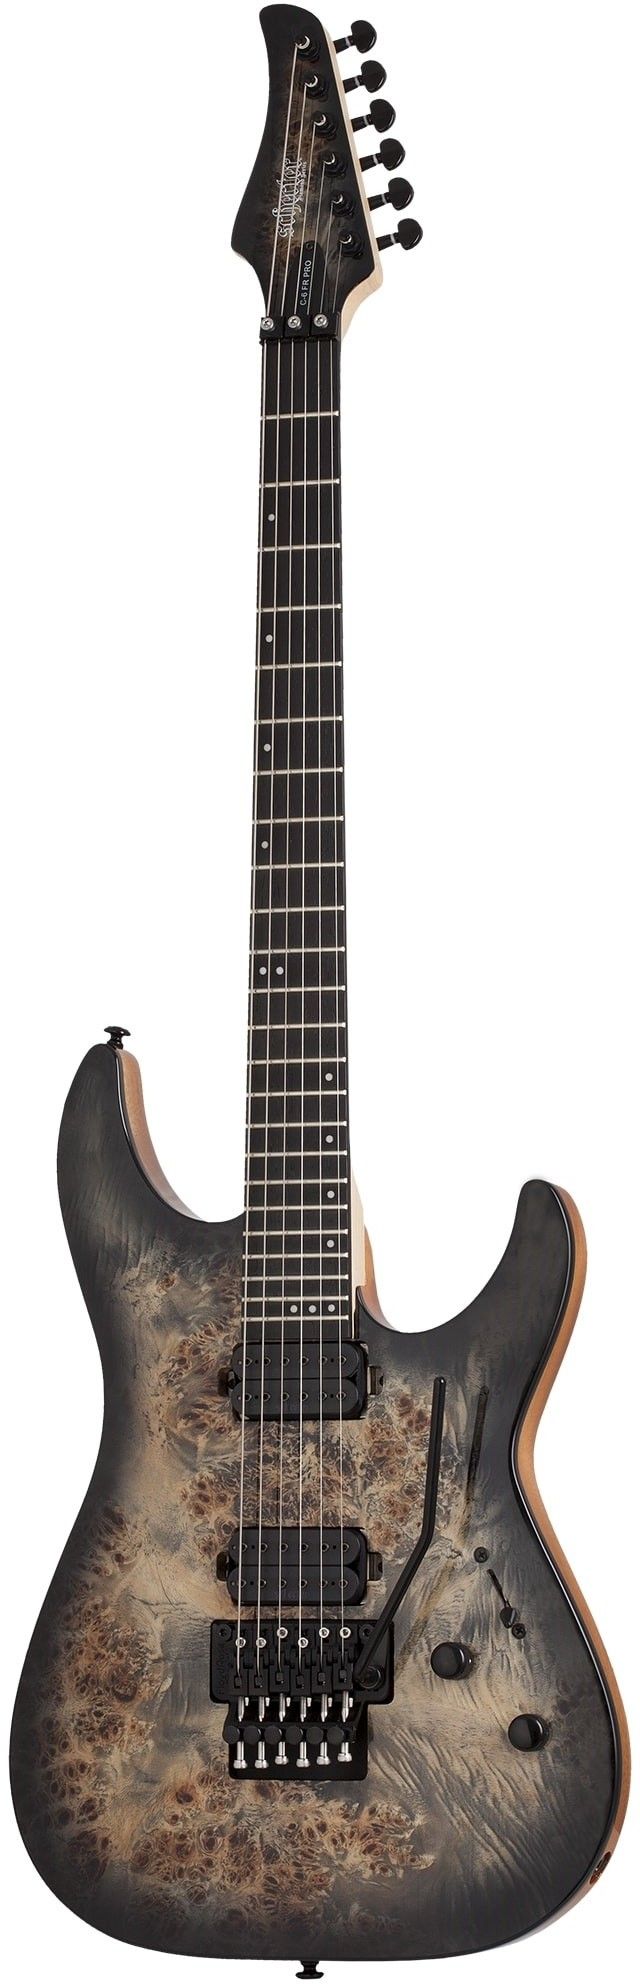 Schecter C-6 Pro Floyd Rose Special Bridge Electric Guitar